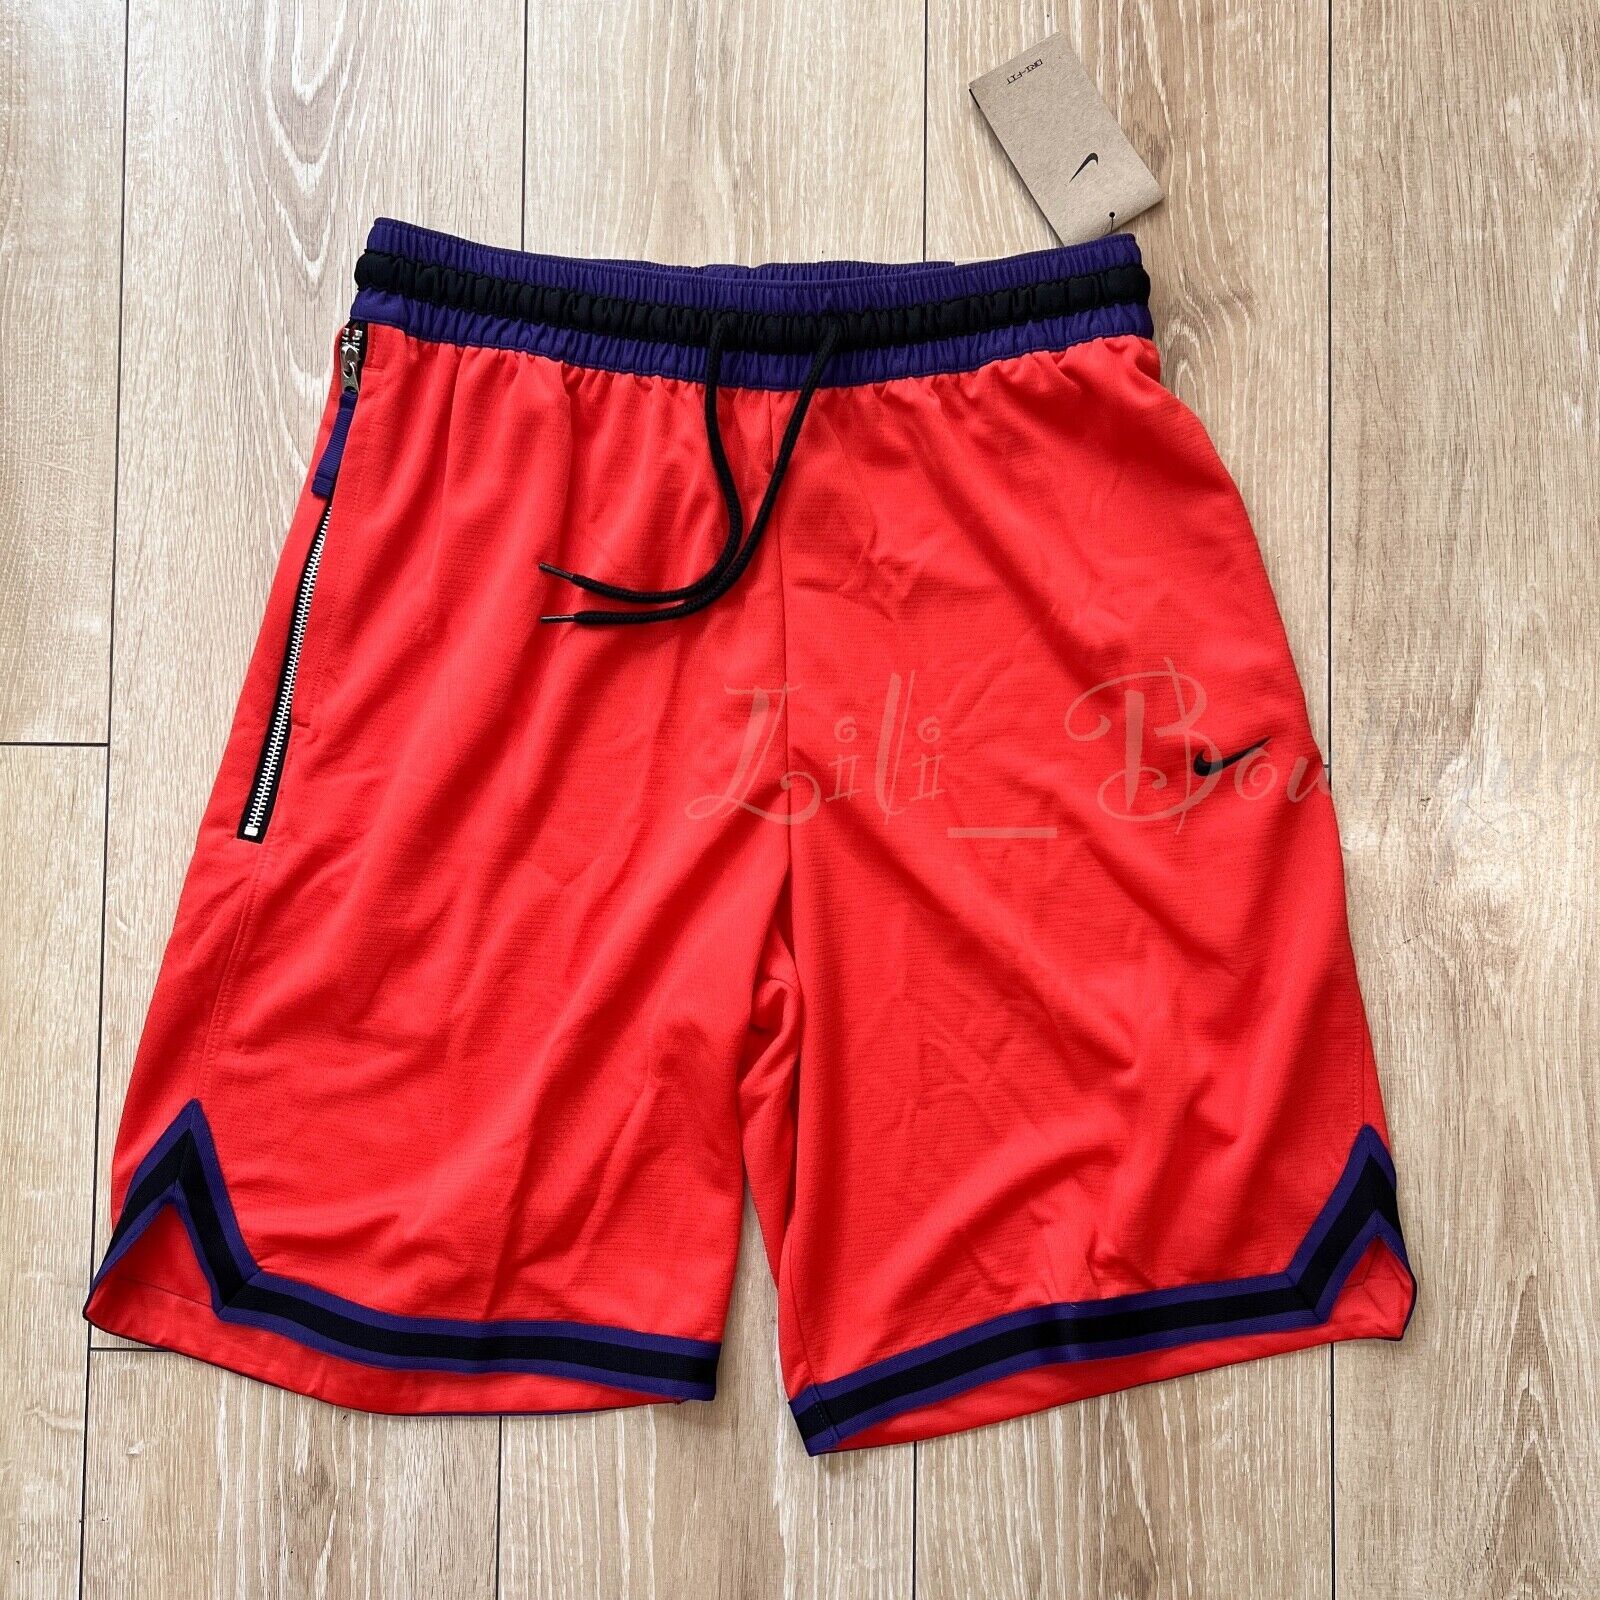 Nike Dri-FIT Flex Stride Men's Trail Shorts CZ9052-010 Size S at   Men's Clothing store